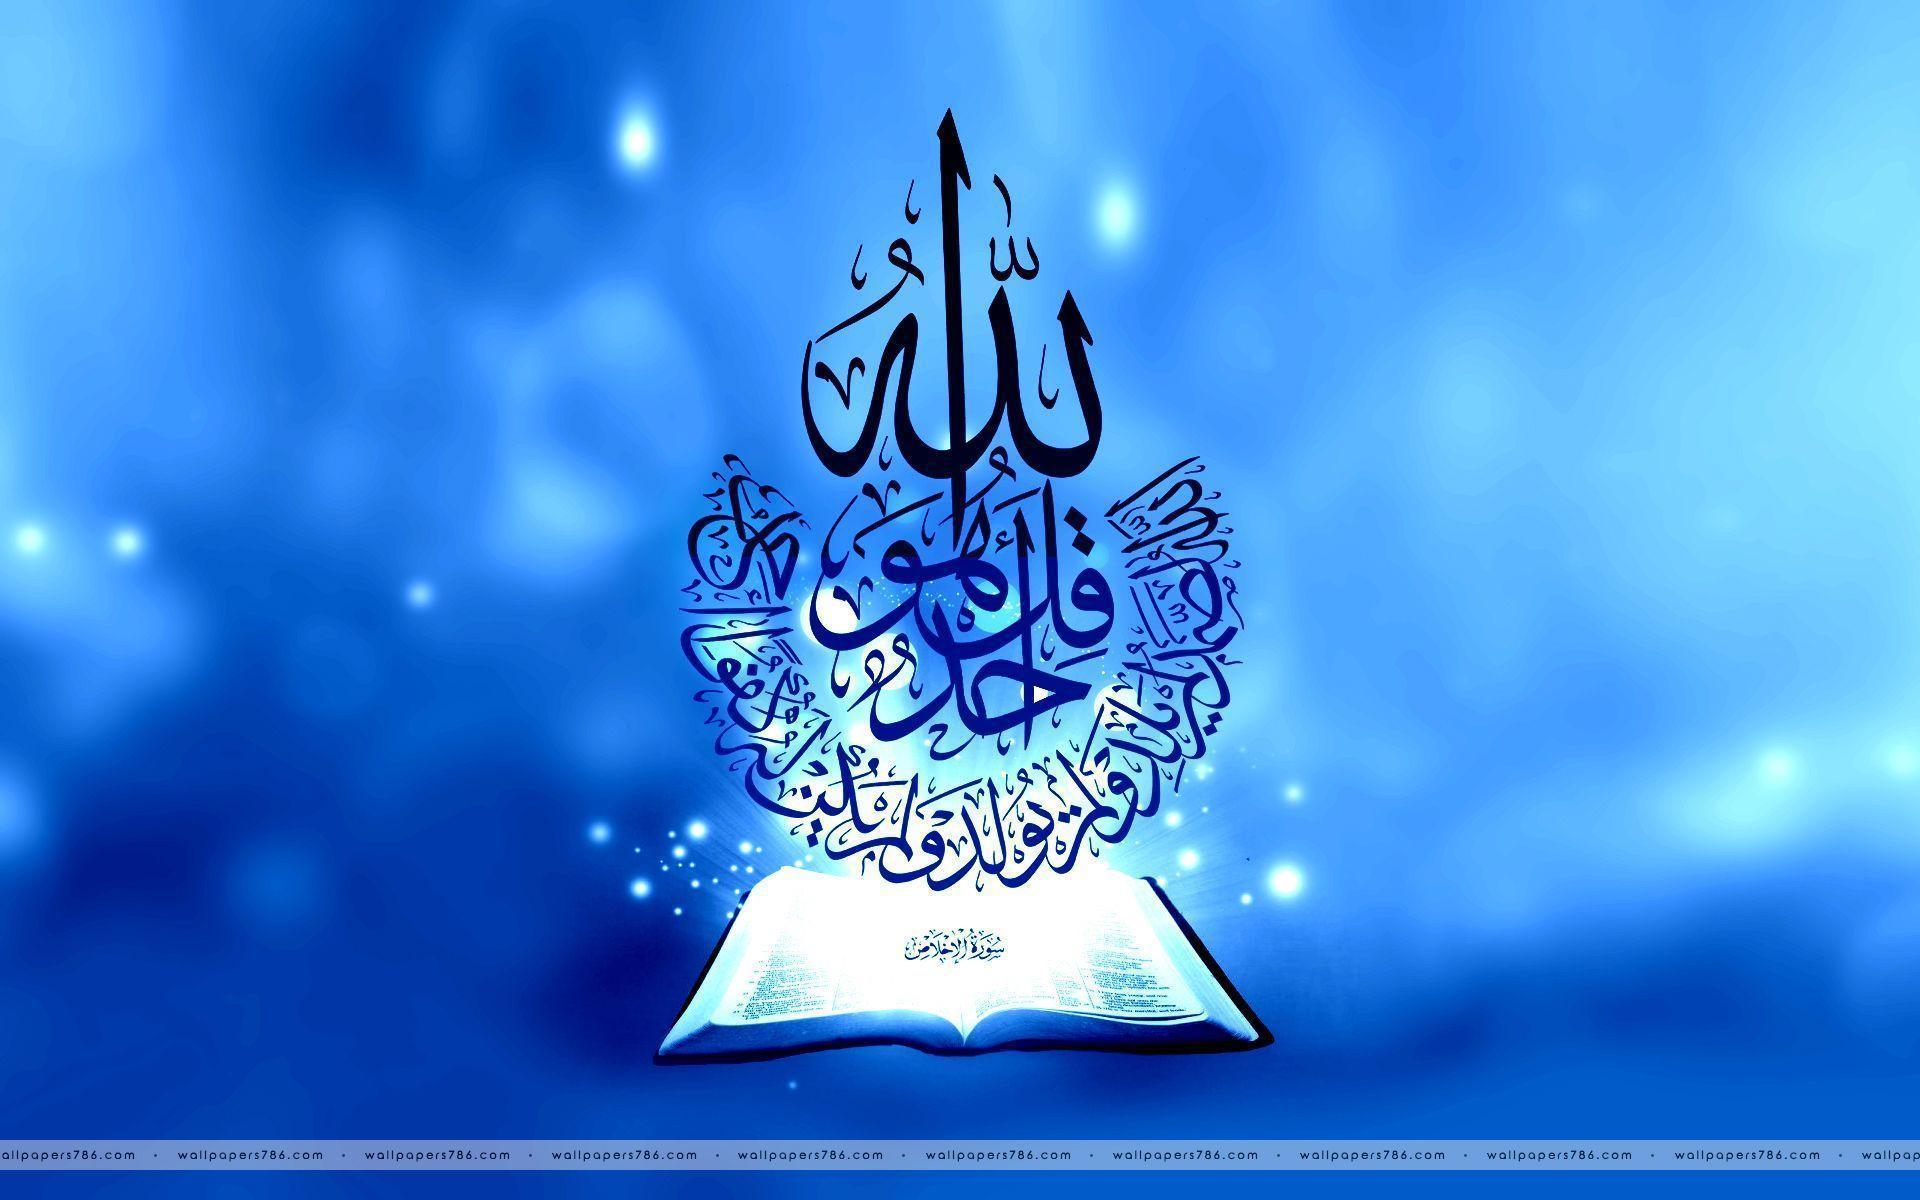 Allah Name Wallpaper Hd Free Download - Islamic Wallpaper Hd